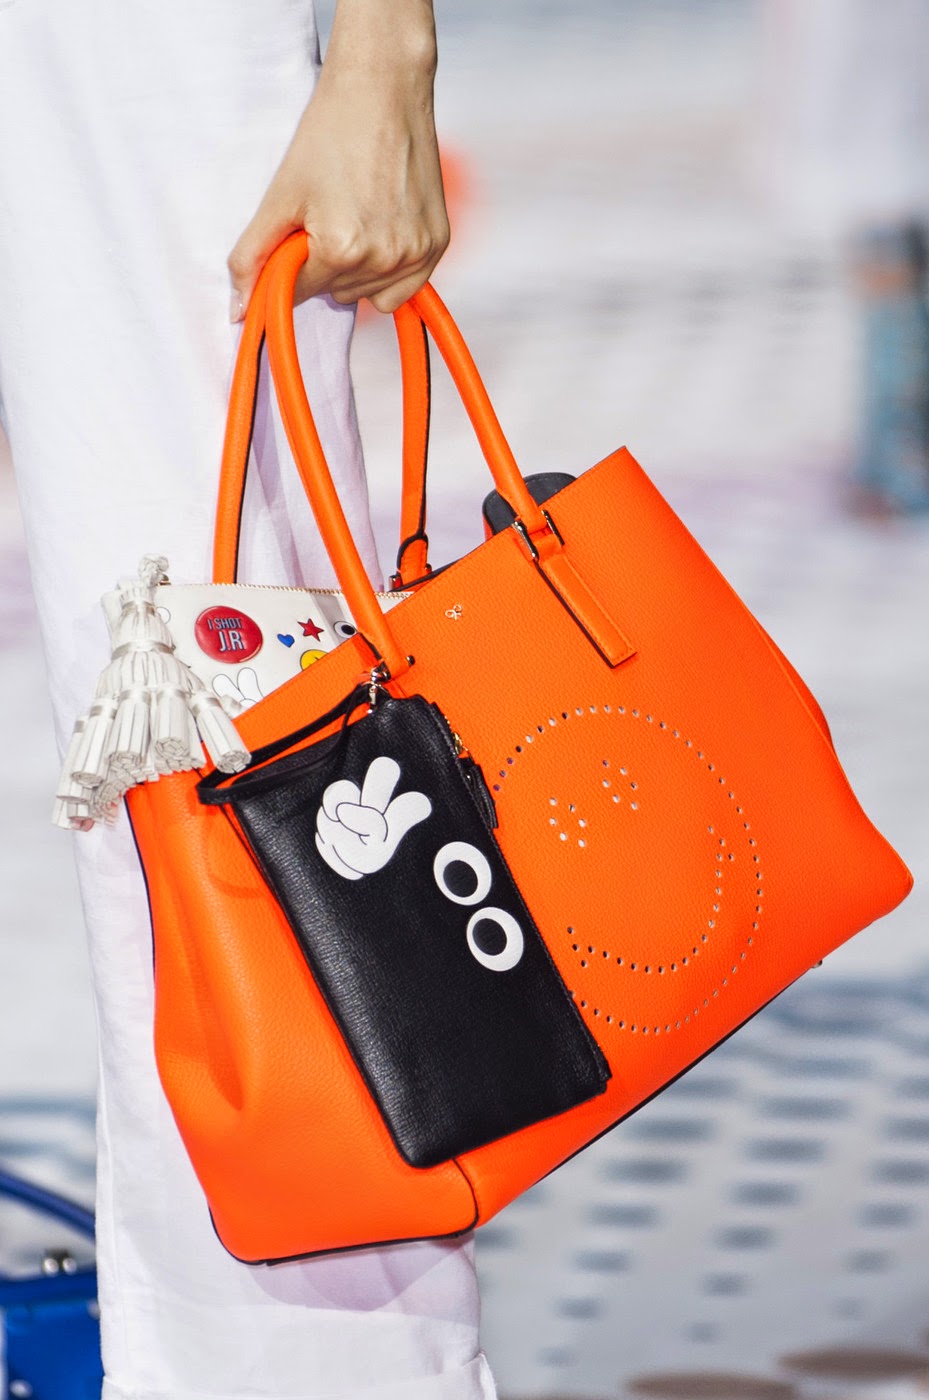 Anya Hindmarch сумки. Яркие сочные цвета сумок. Catwalk сумка тканевая. Сумка Fashion women's Bag. Show bags